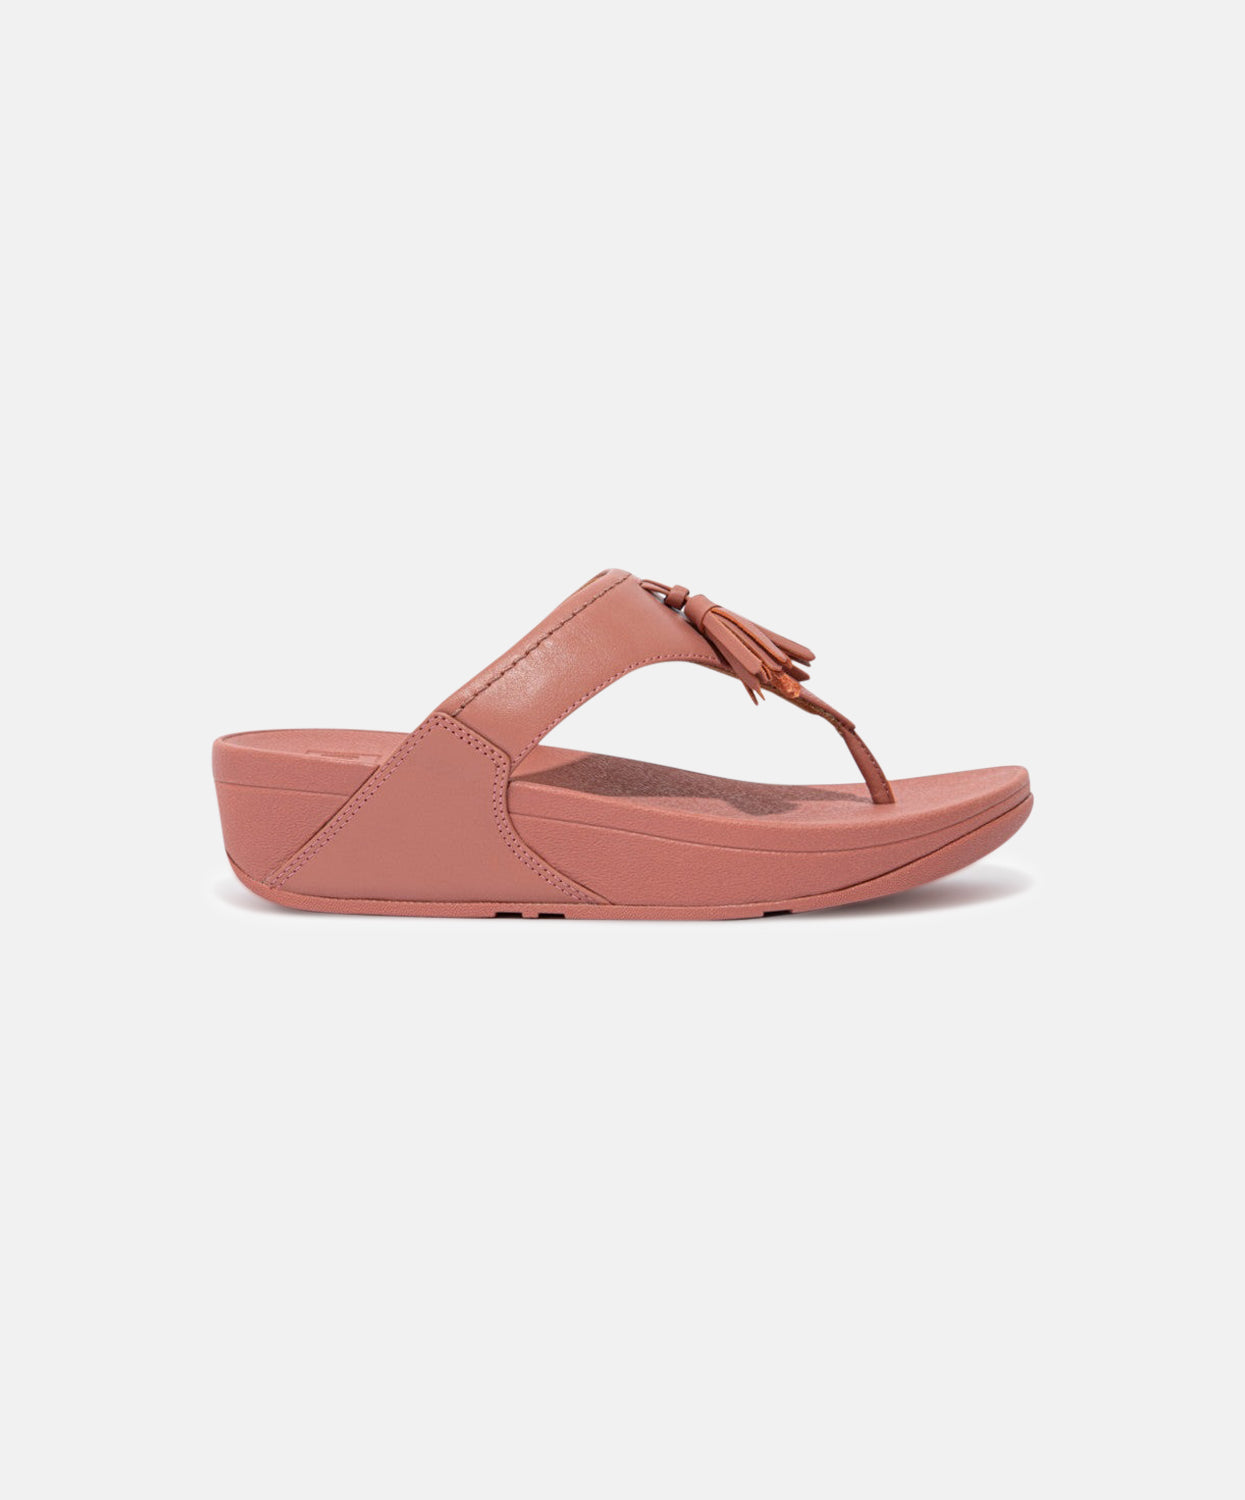 Women's Lulu Leather Toe-Post Sandals | FitFlop US